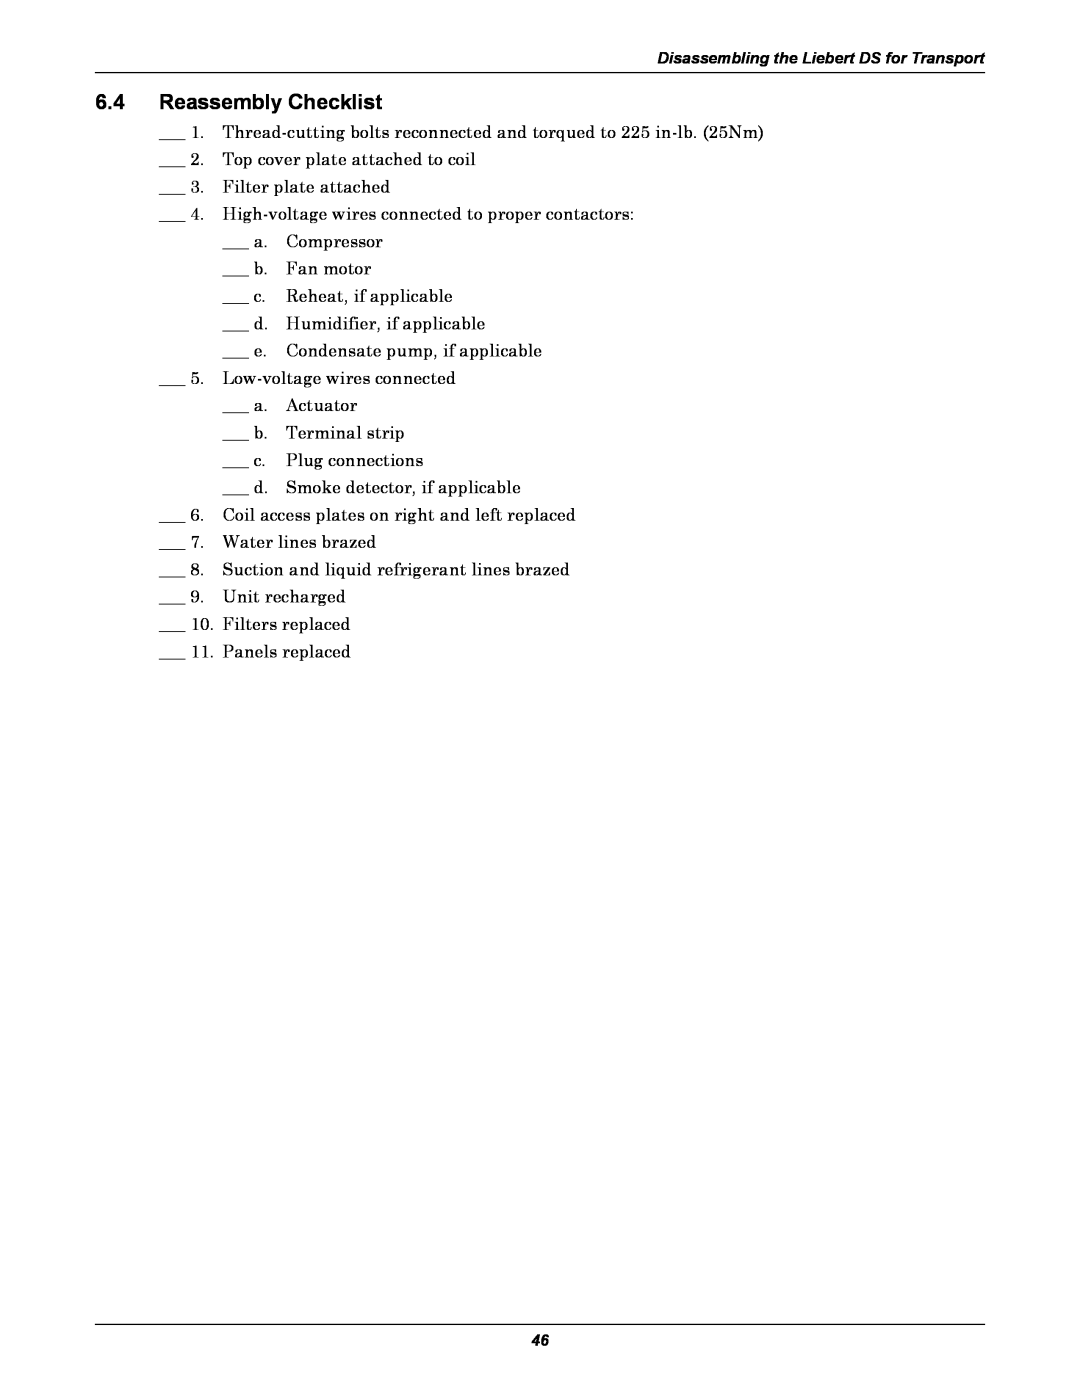 Liebert DS user manual Reassembly Checklist 